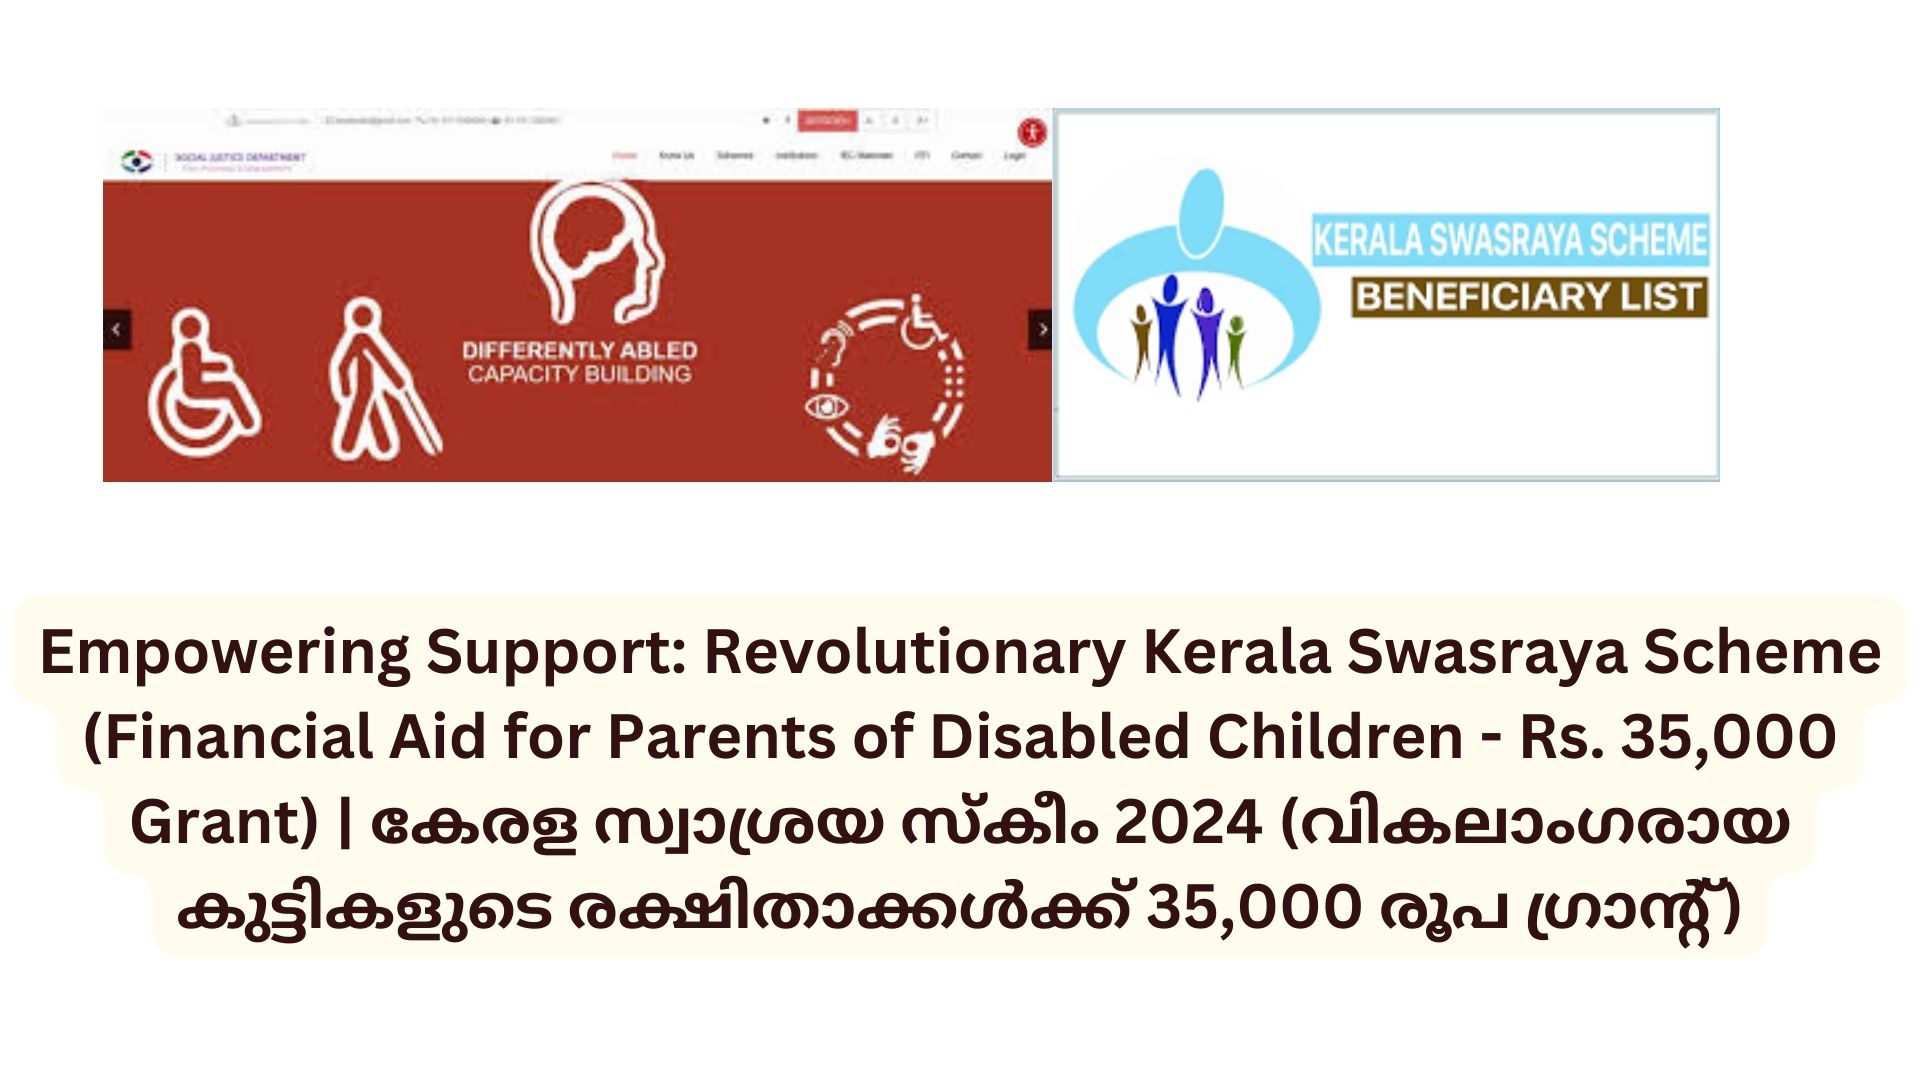 Empowering Support: Revolutionary Kerala Swasraya Scheme (Financial Aid for Parents of Disabled Children - Rs. 35,000 Grant) | കേരള സ്വാശ്രയ സ്കീം 2024 (വികലാംഗരായ കുട്ടികളുടെ രക്ഷിതാക്കൾക്ക് 35,000 രൂപ ഗ്രാൻ്റ്)